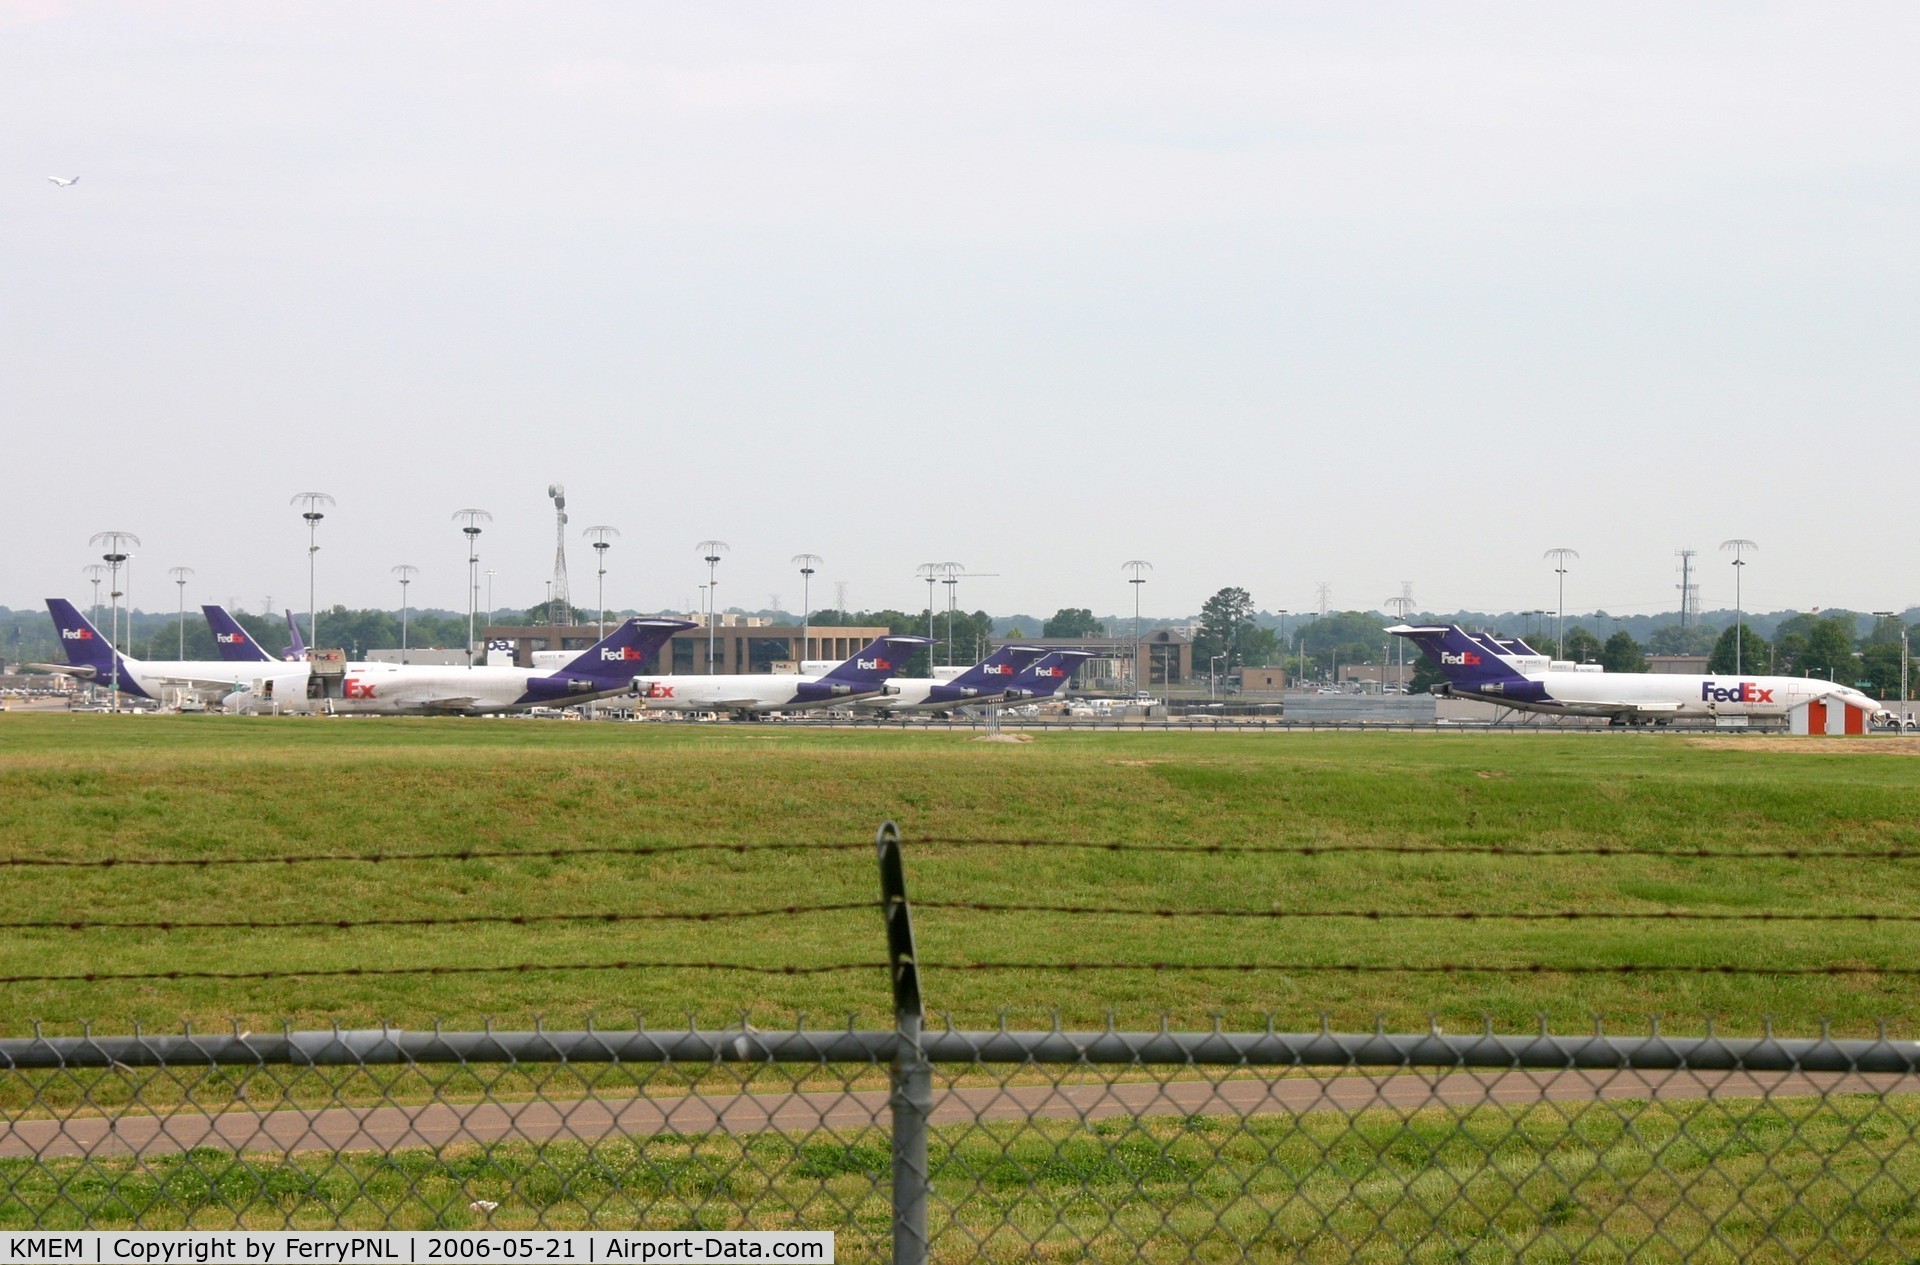 Memphis International Airport (MEM) - Fedex B727's at its base in 2006